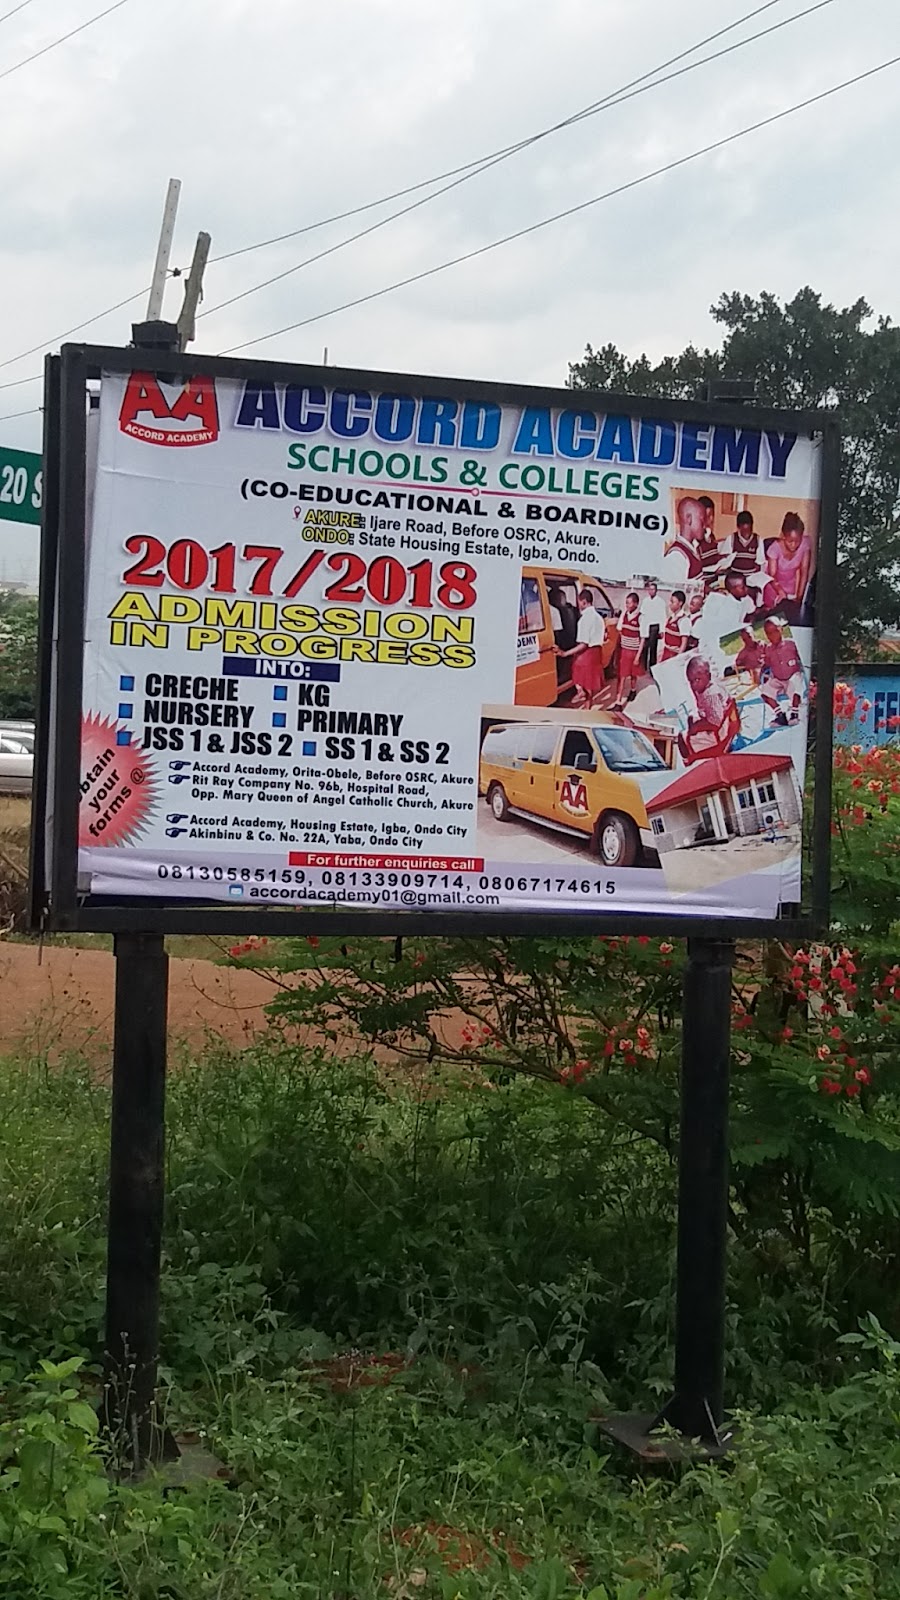 Accord Academy